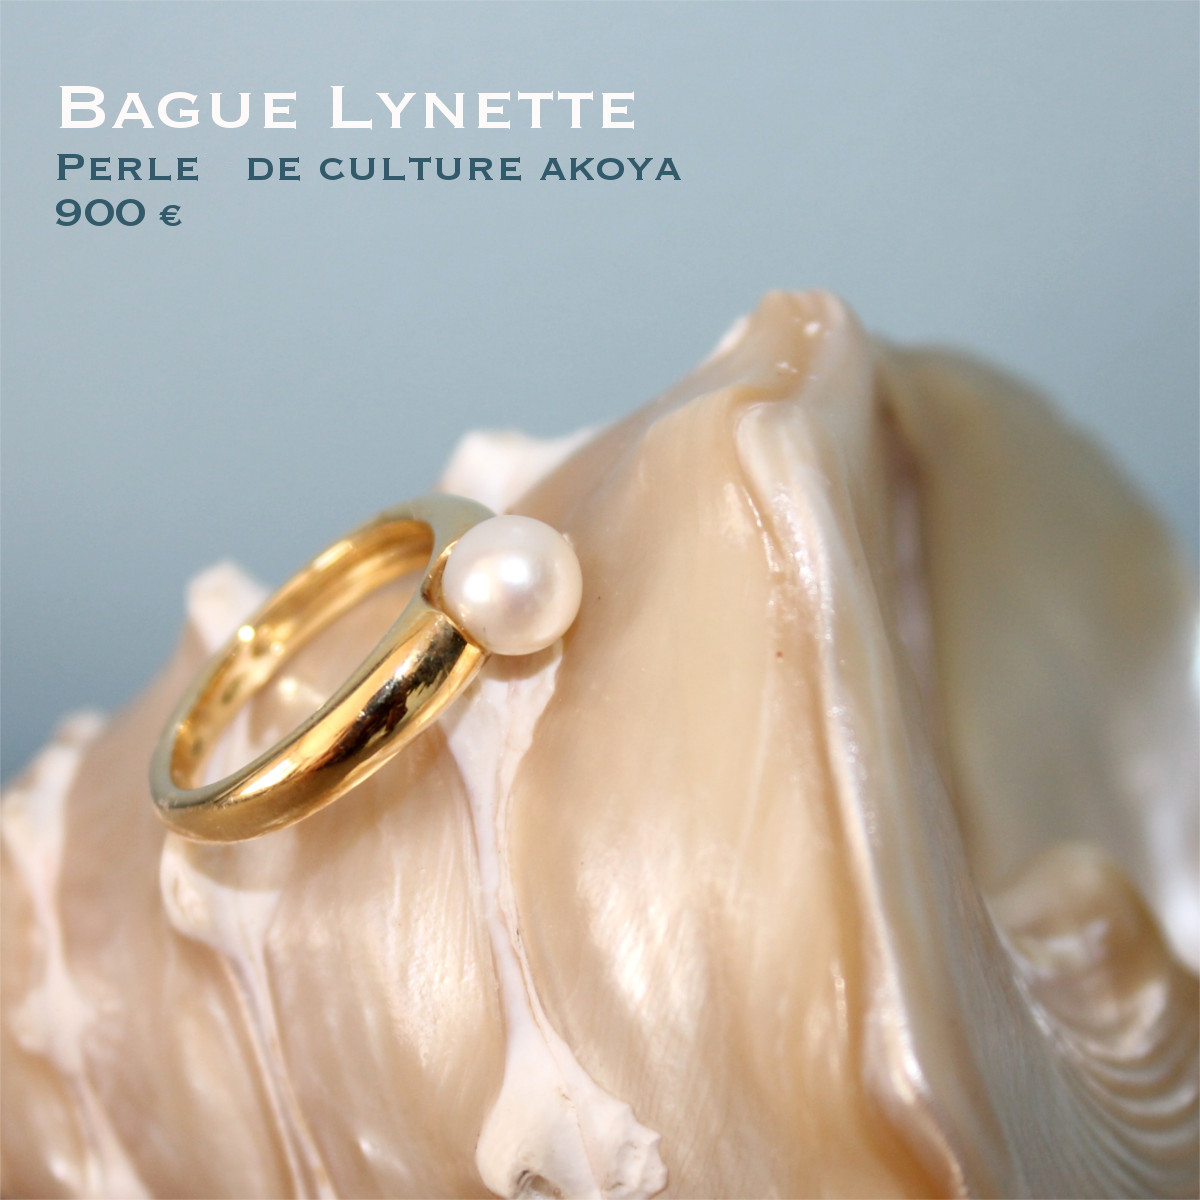 Bague Lynette - Image 3 